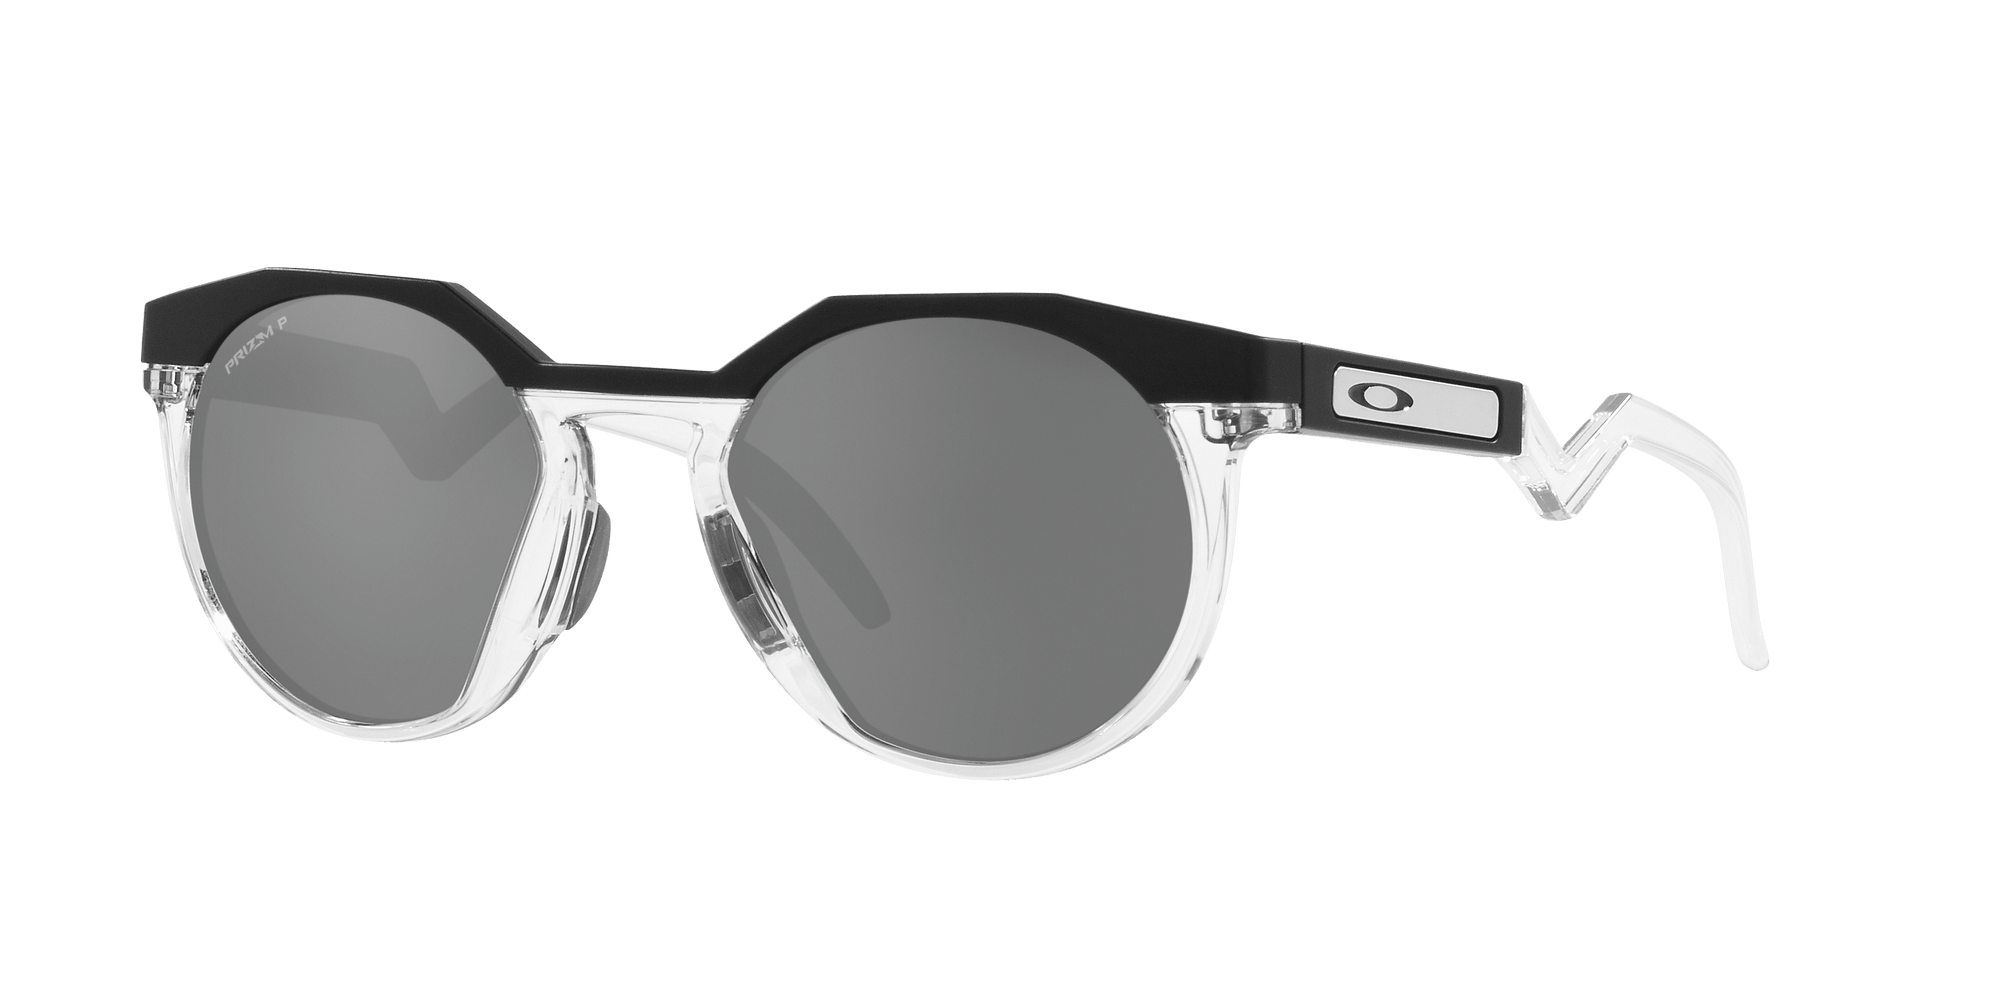 OAKLEY HSTN Matte Black - Prizm Black Polarized Sunglasses Sunglasses Oakley 